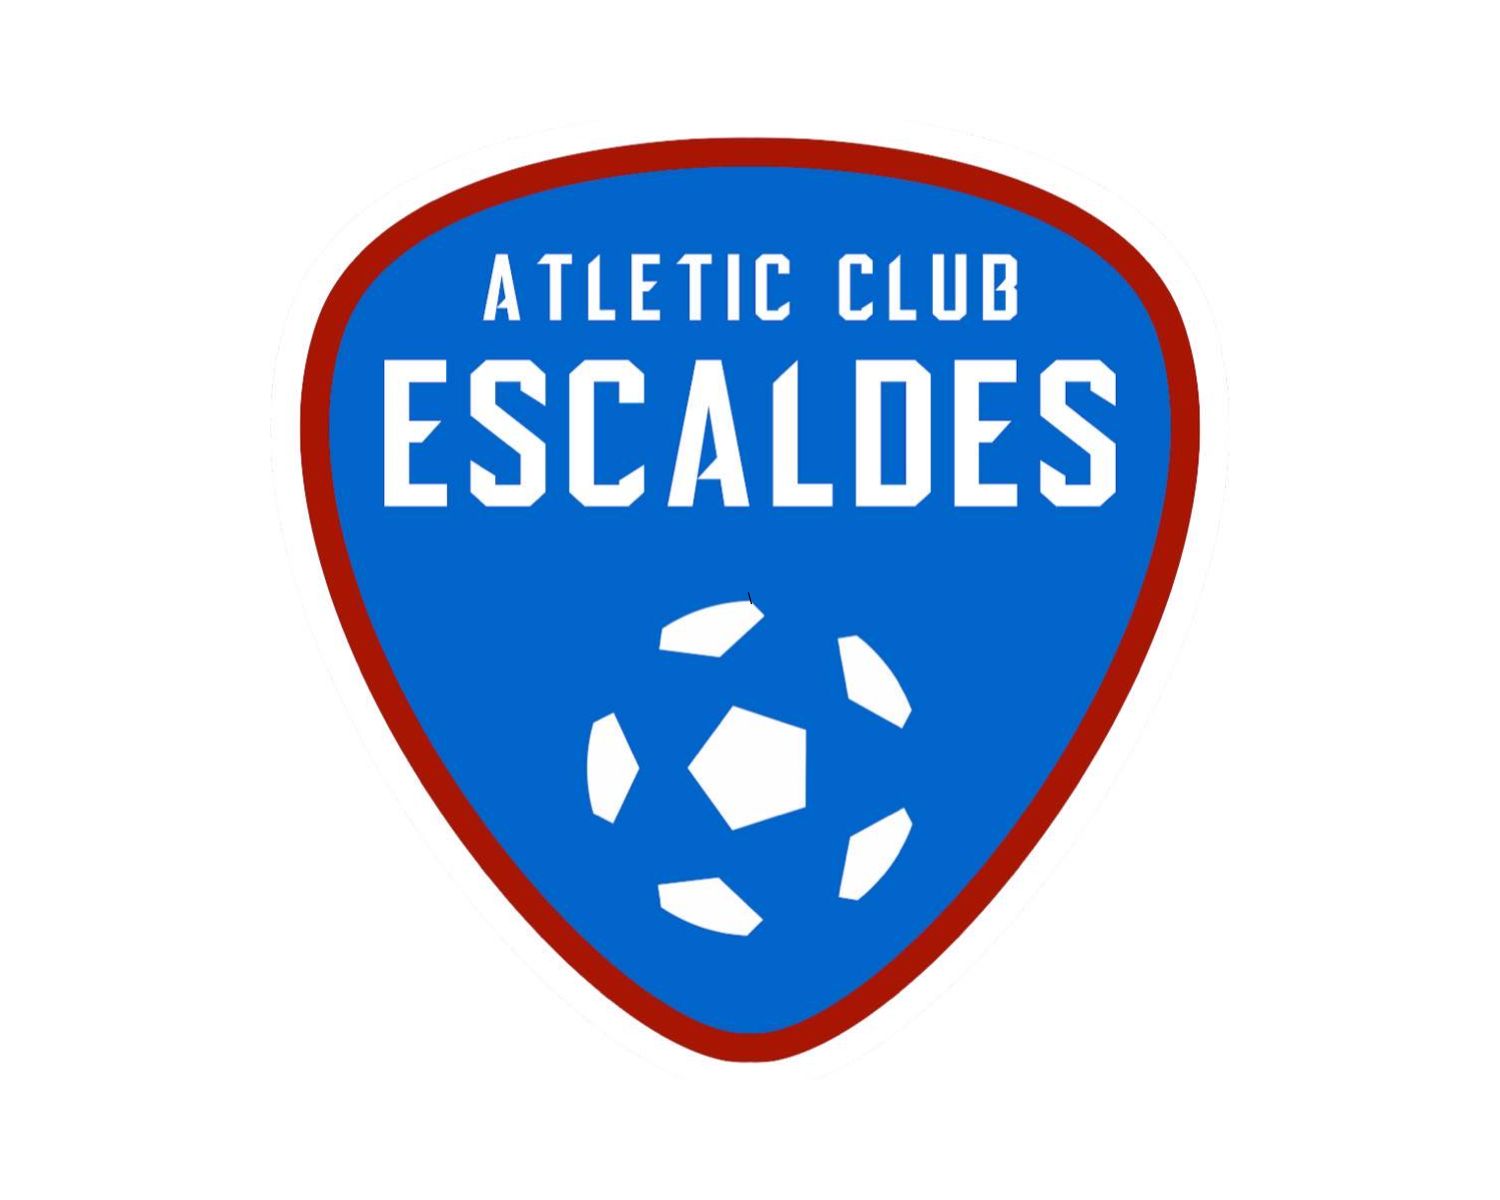 atletic-club-descaldes-18-football-club-facts